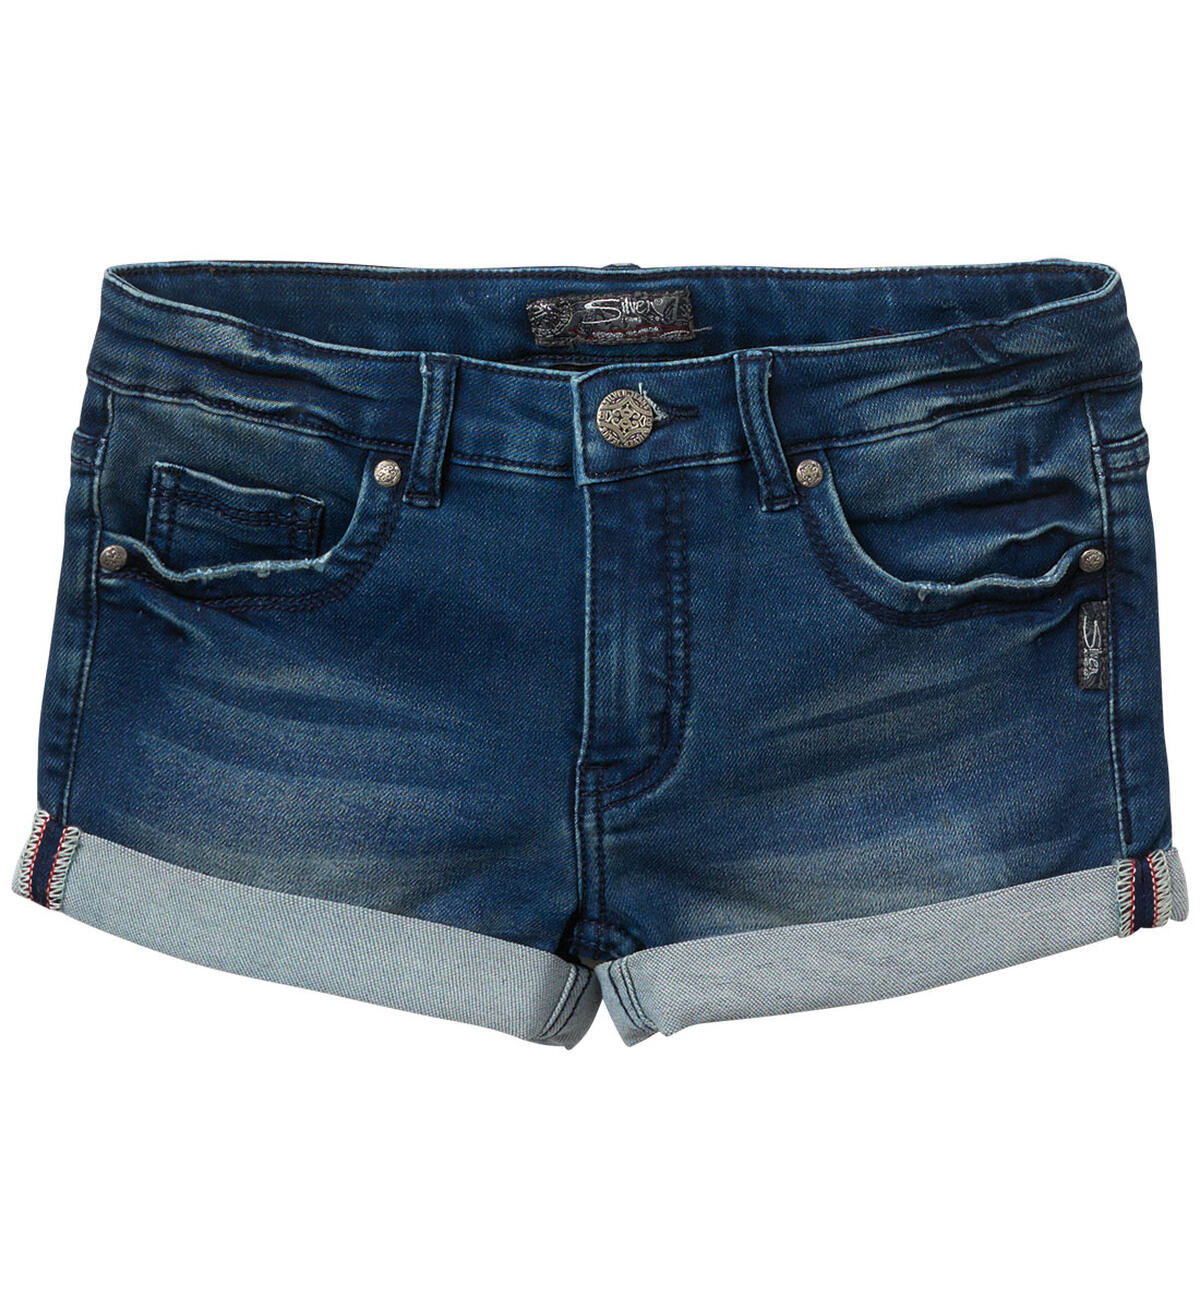 Lacy Knit Denim Shorts in Dark Wash (7-16), , hi-res image number 0